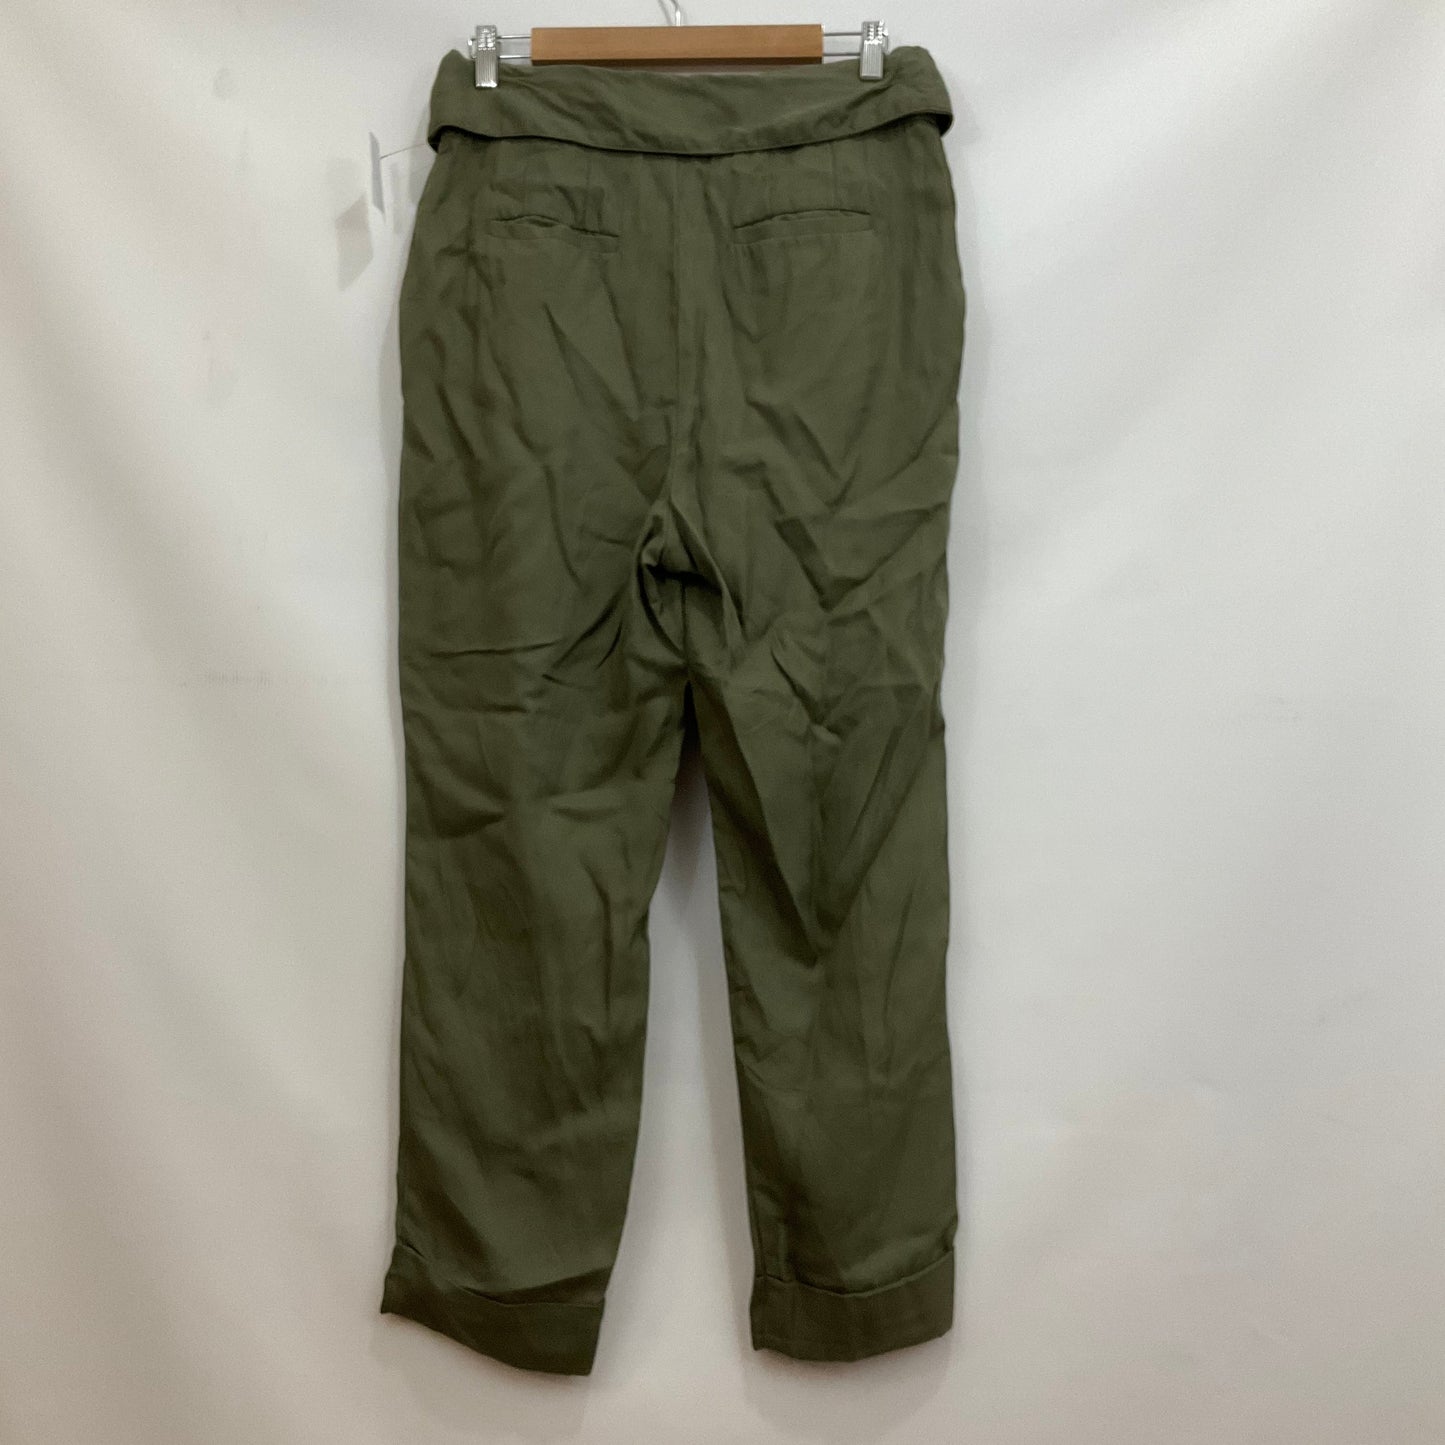 Green Pants Dress Anthropologie, Size 8